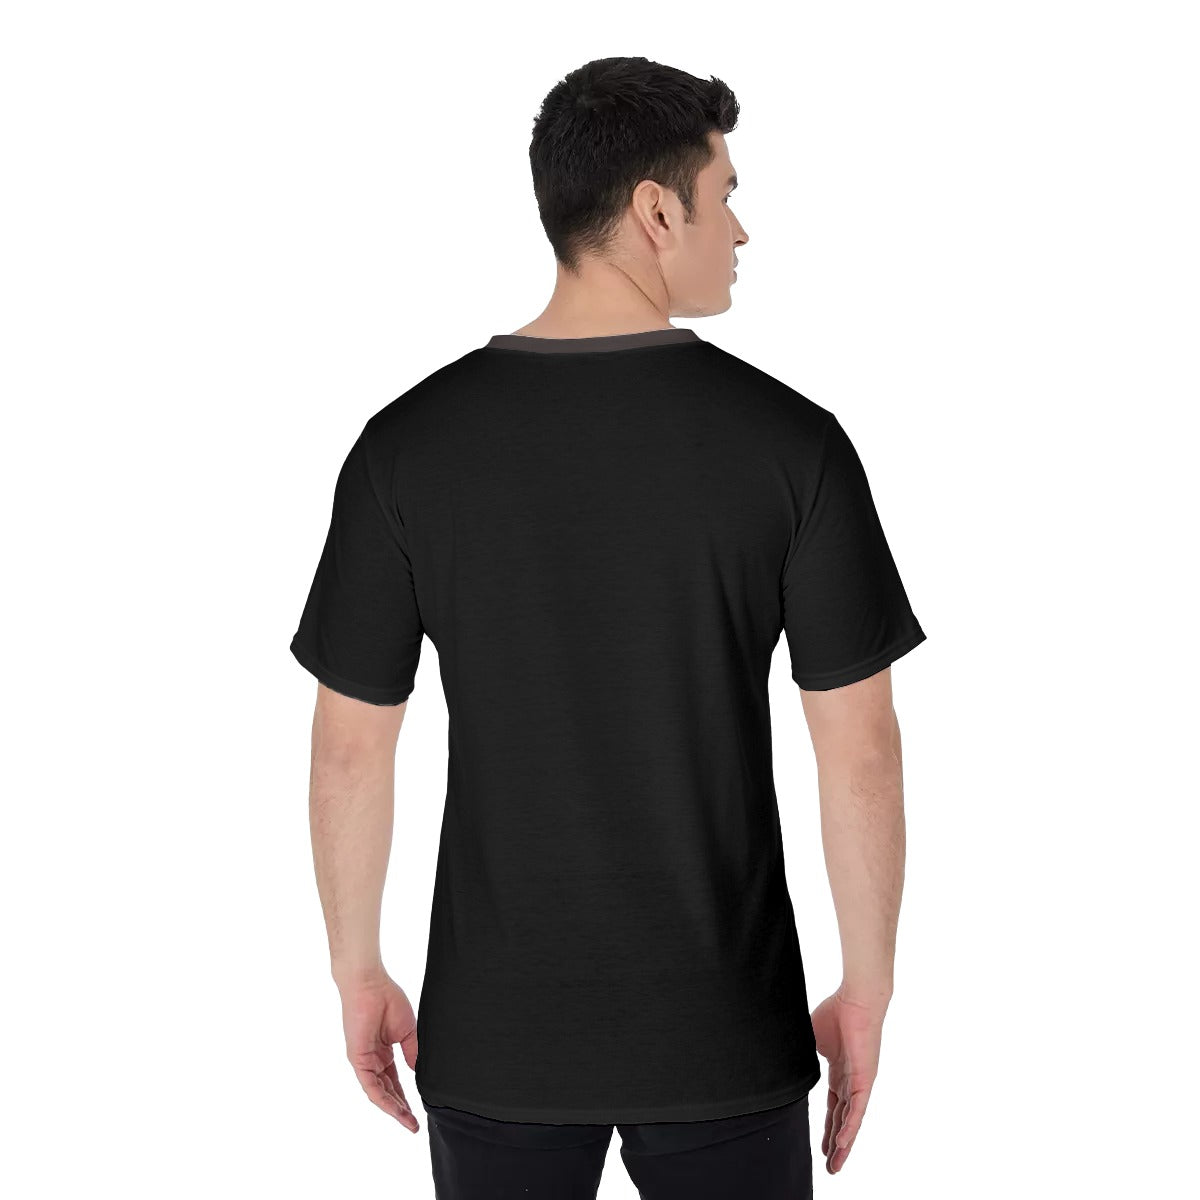 Premium V-Neck Yoga T-Shirt for Men - Personal Hour for Yoga and Meditations 